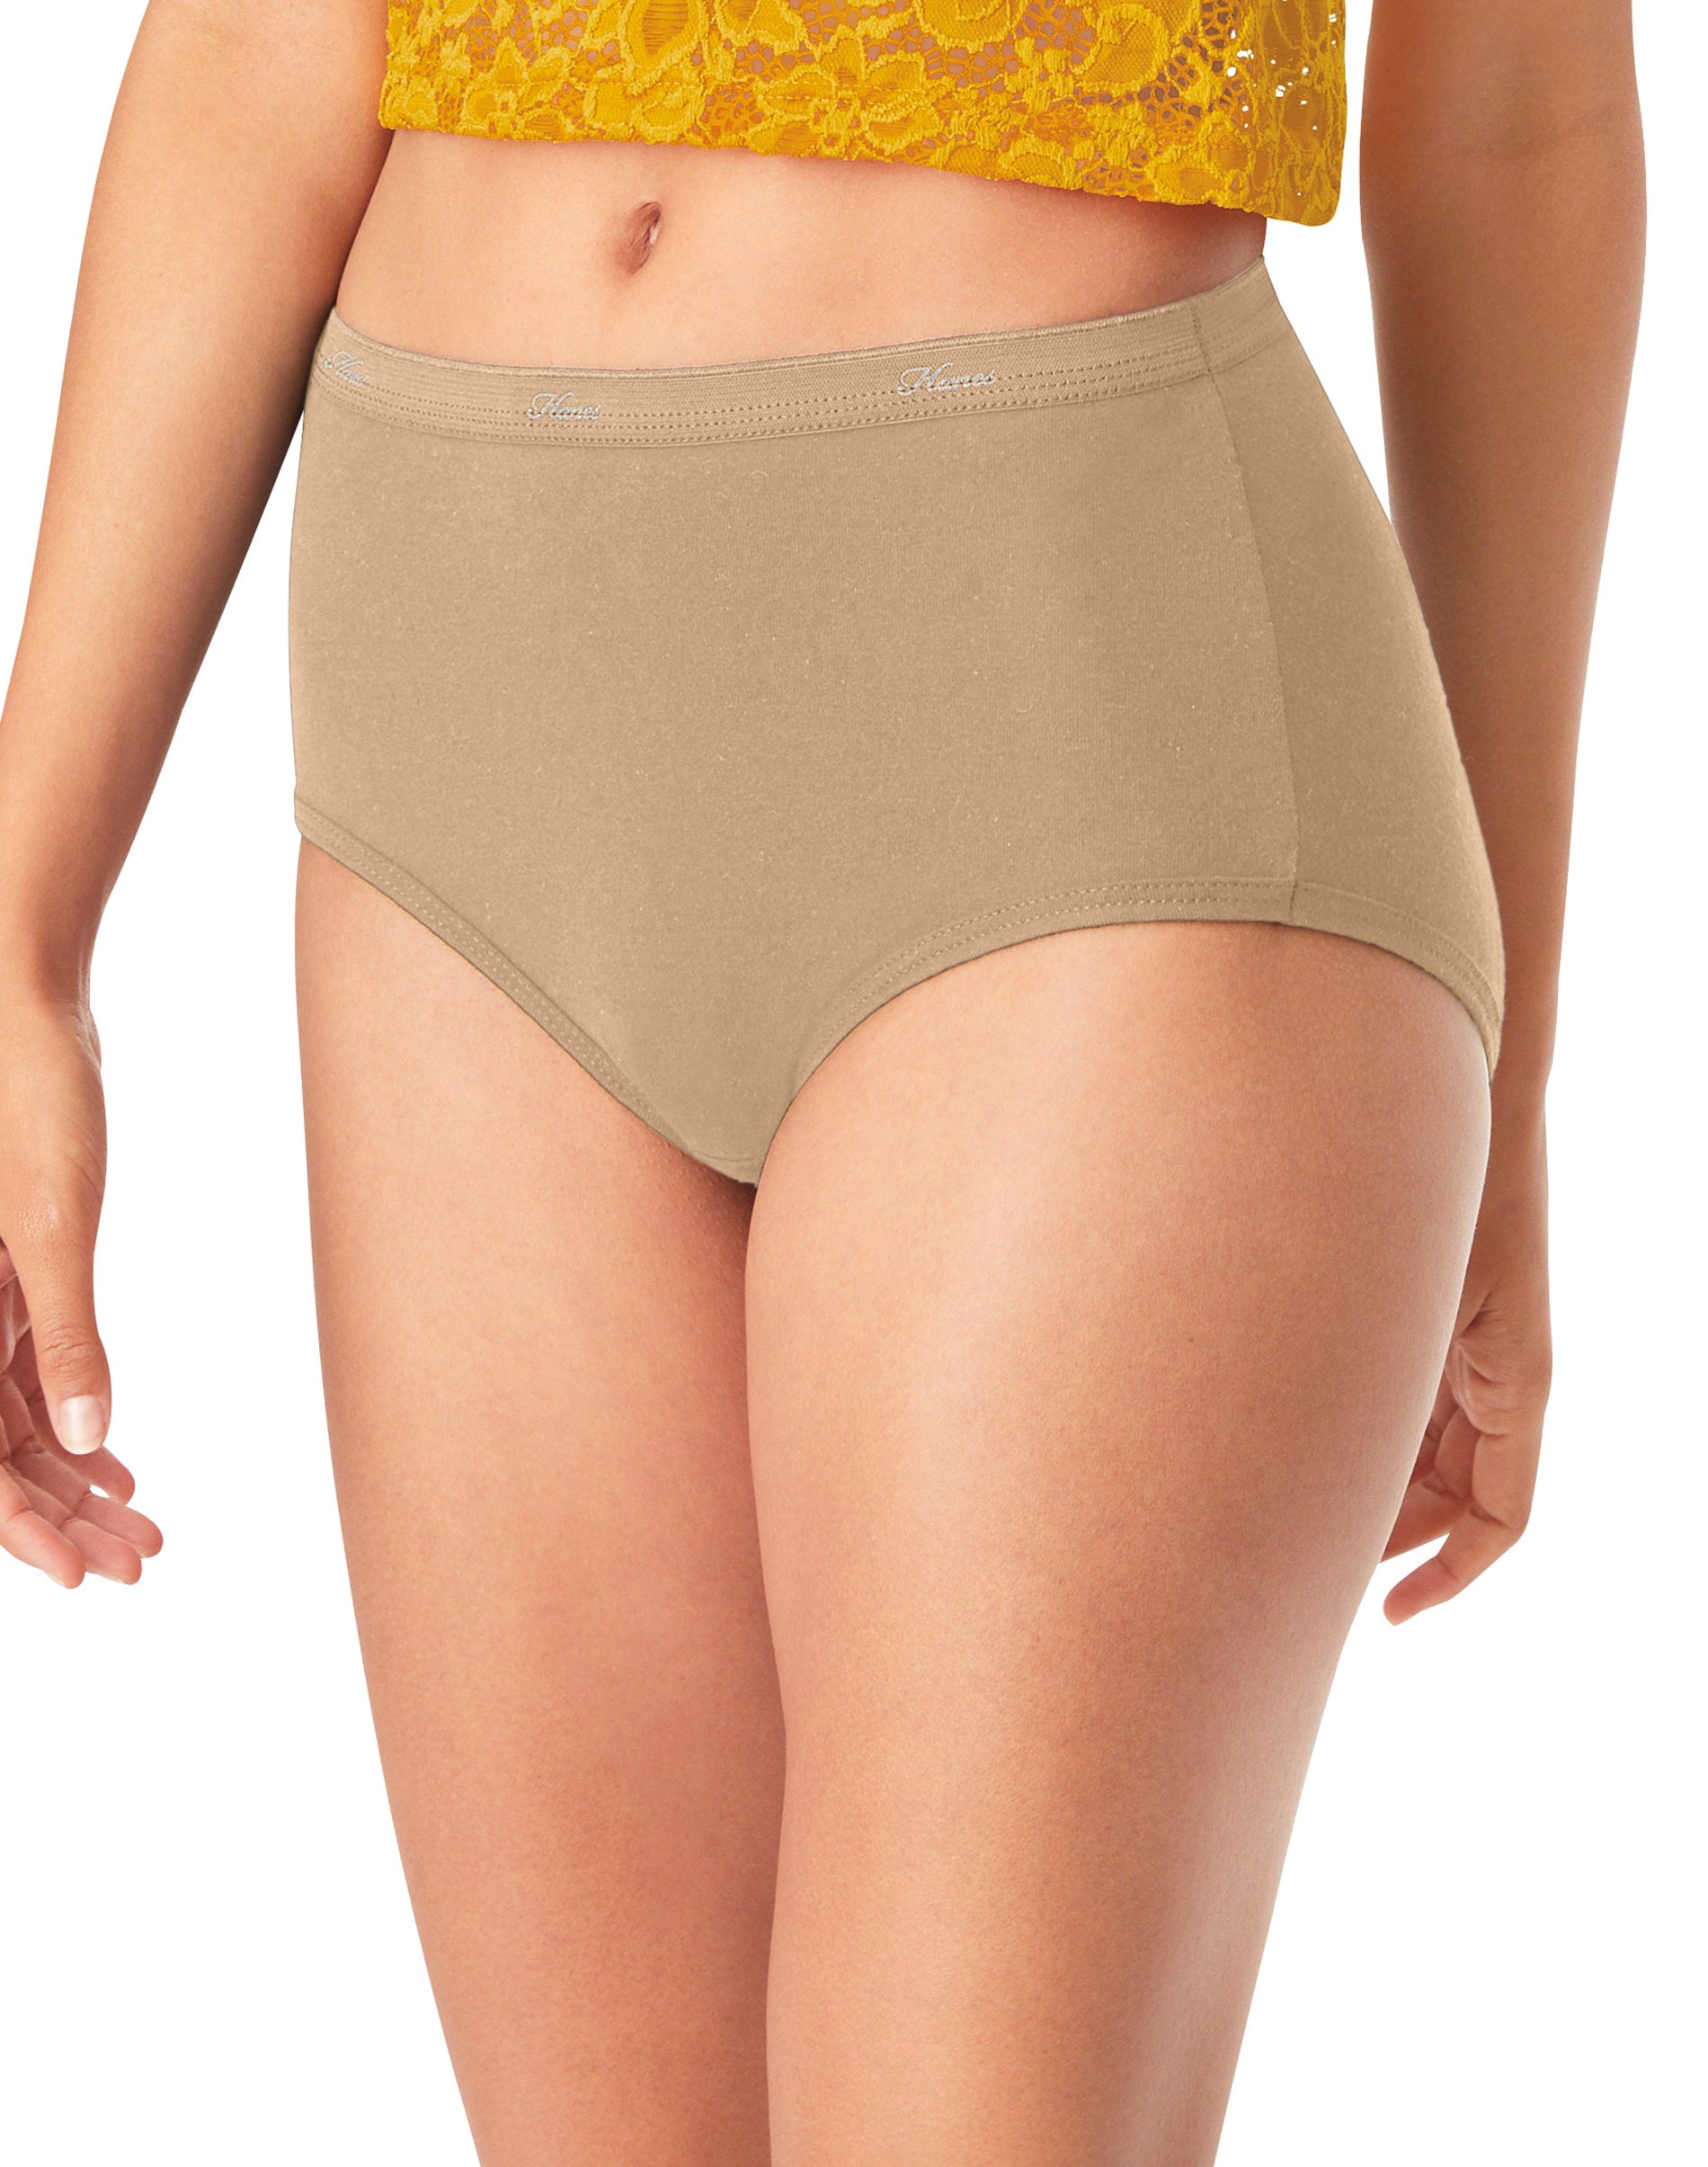 Hanes Womens Brief Panties Pack, Moisture-Wicking Cotton Brief